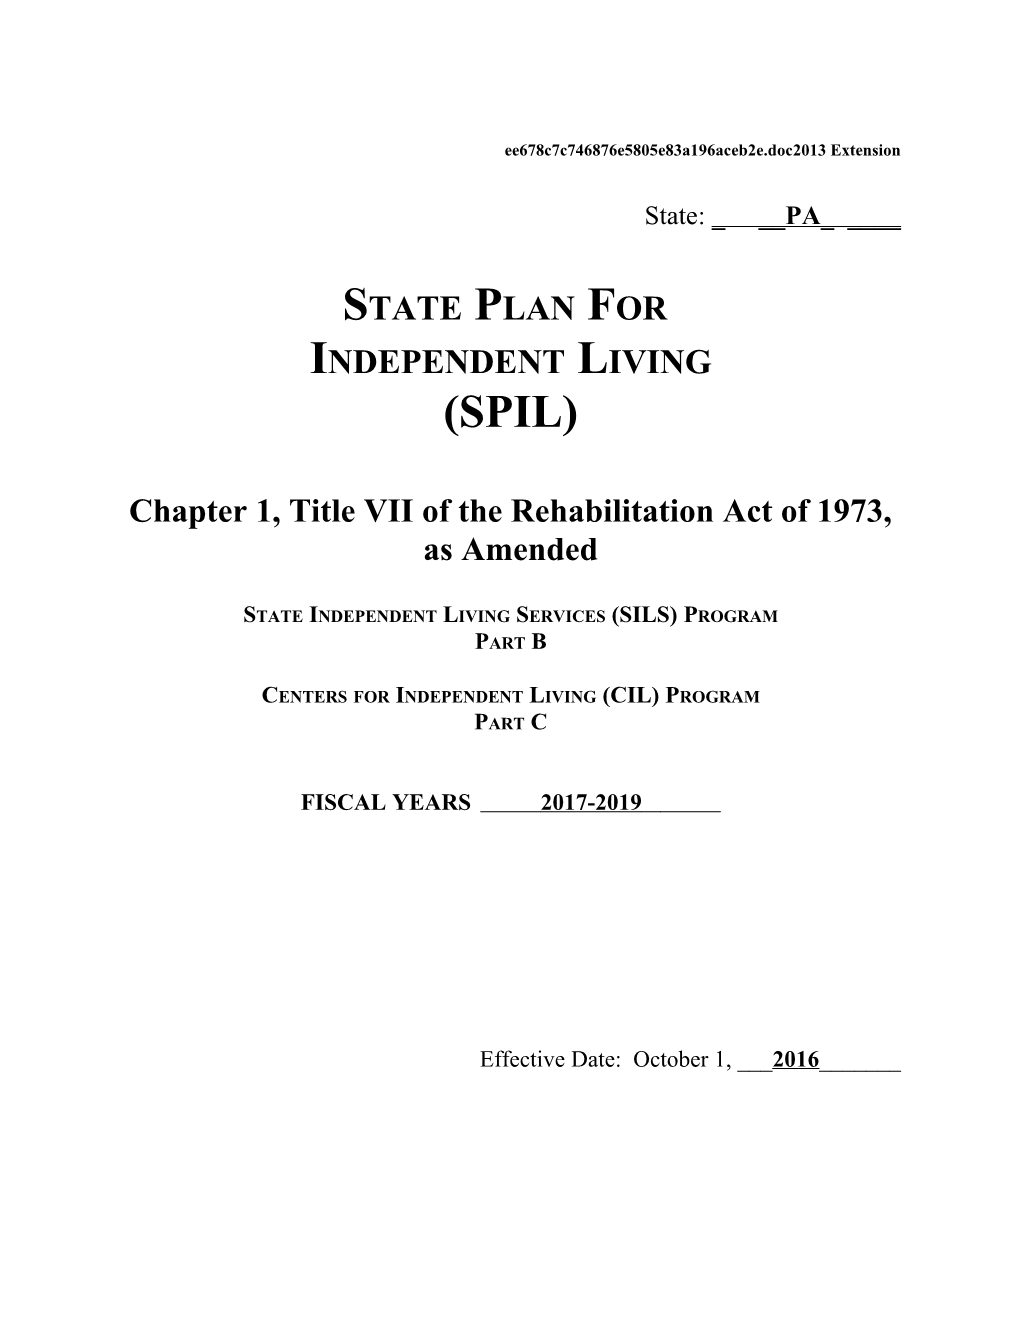 PA FY2017-19 DRAFT Amendment SPIL-0216172013 Extension